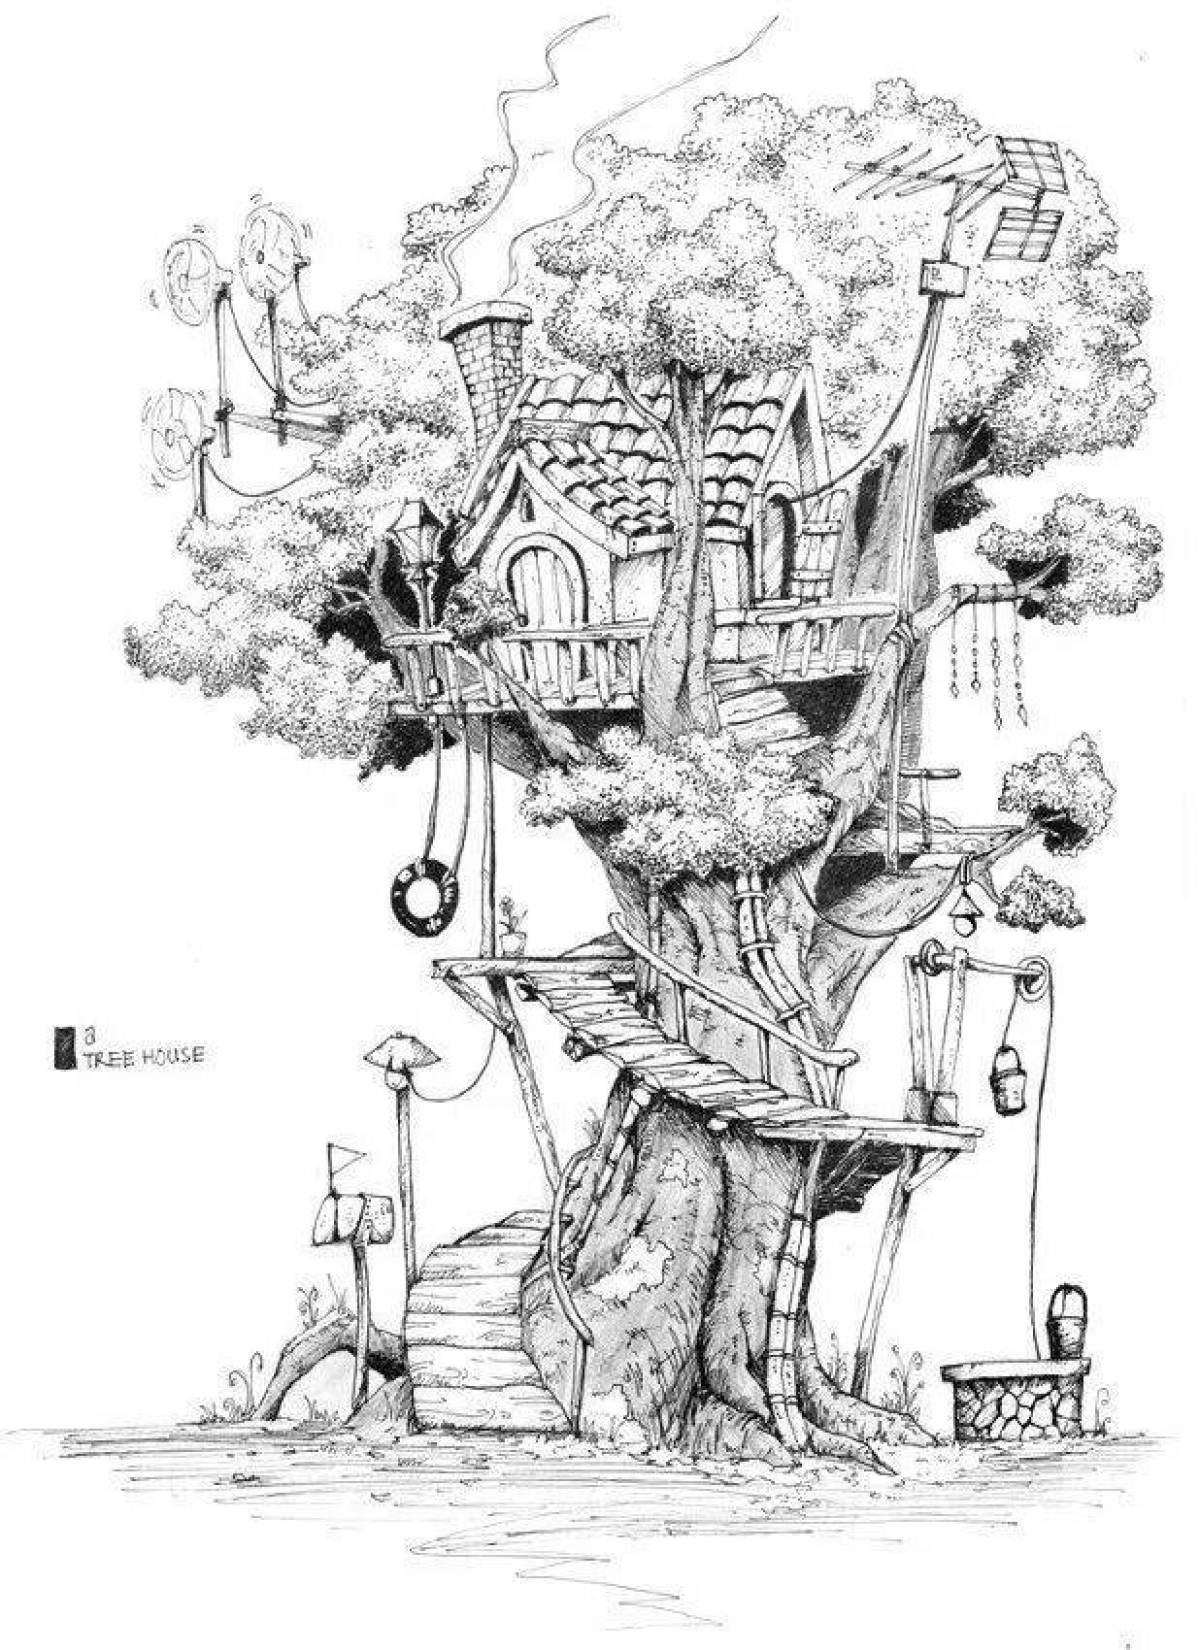 Ornate treehouse